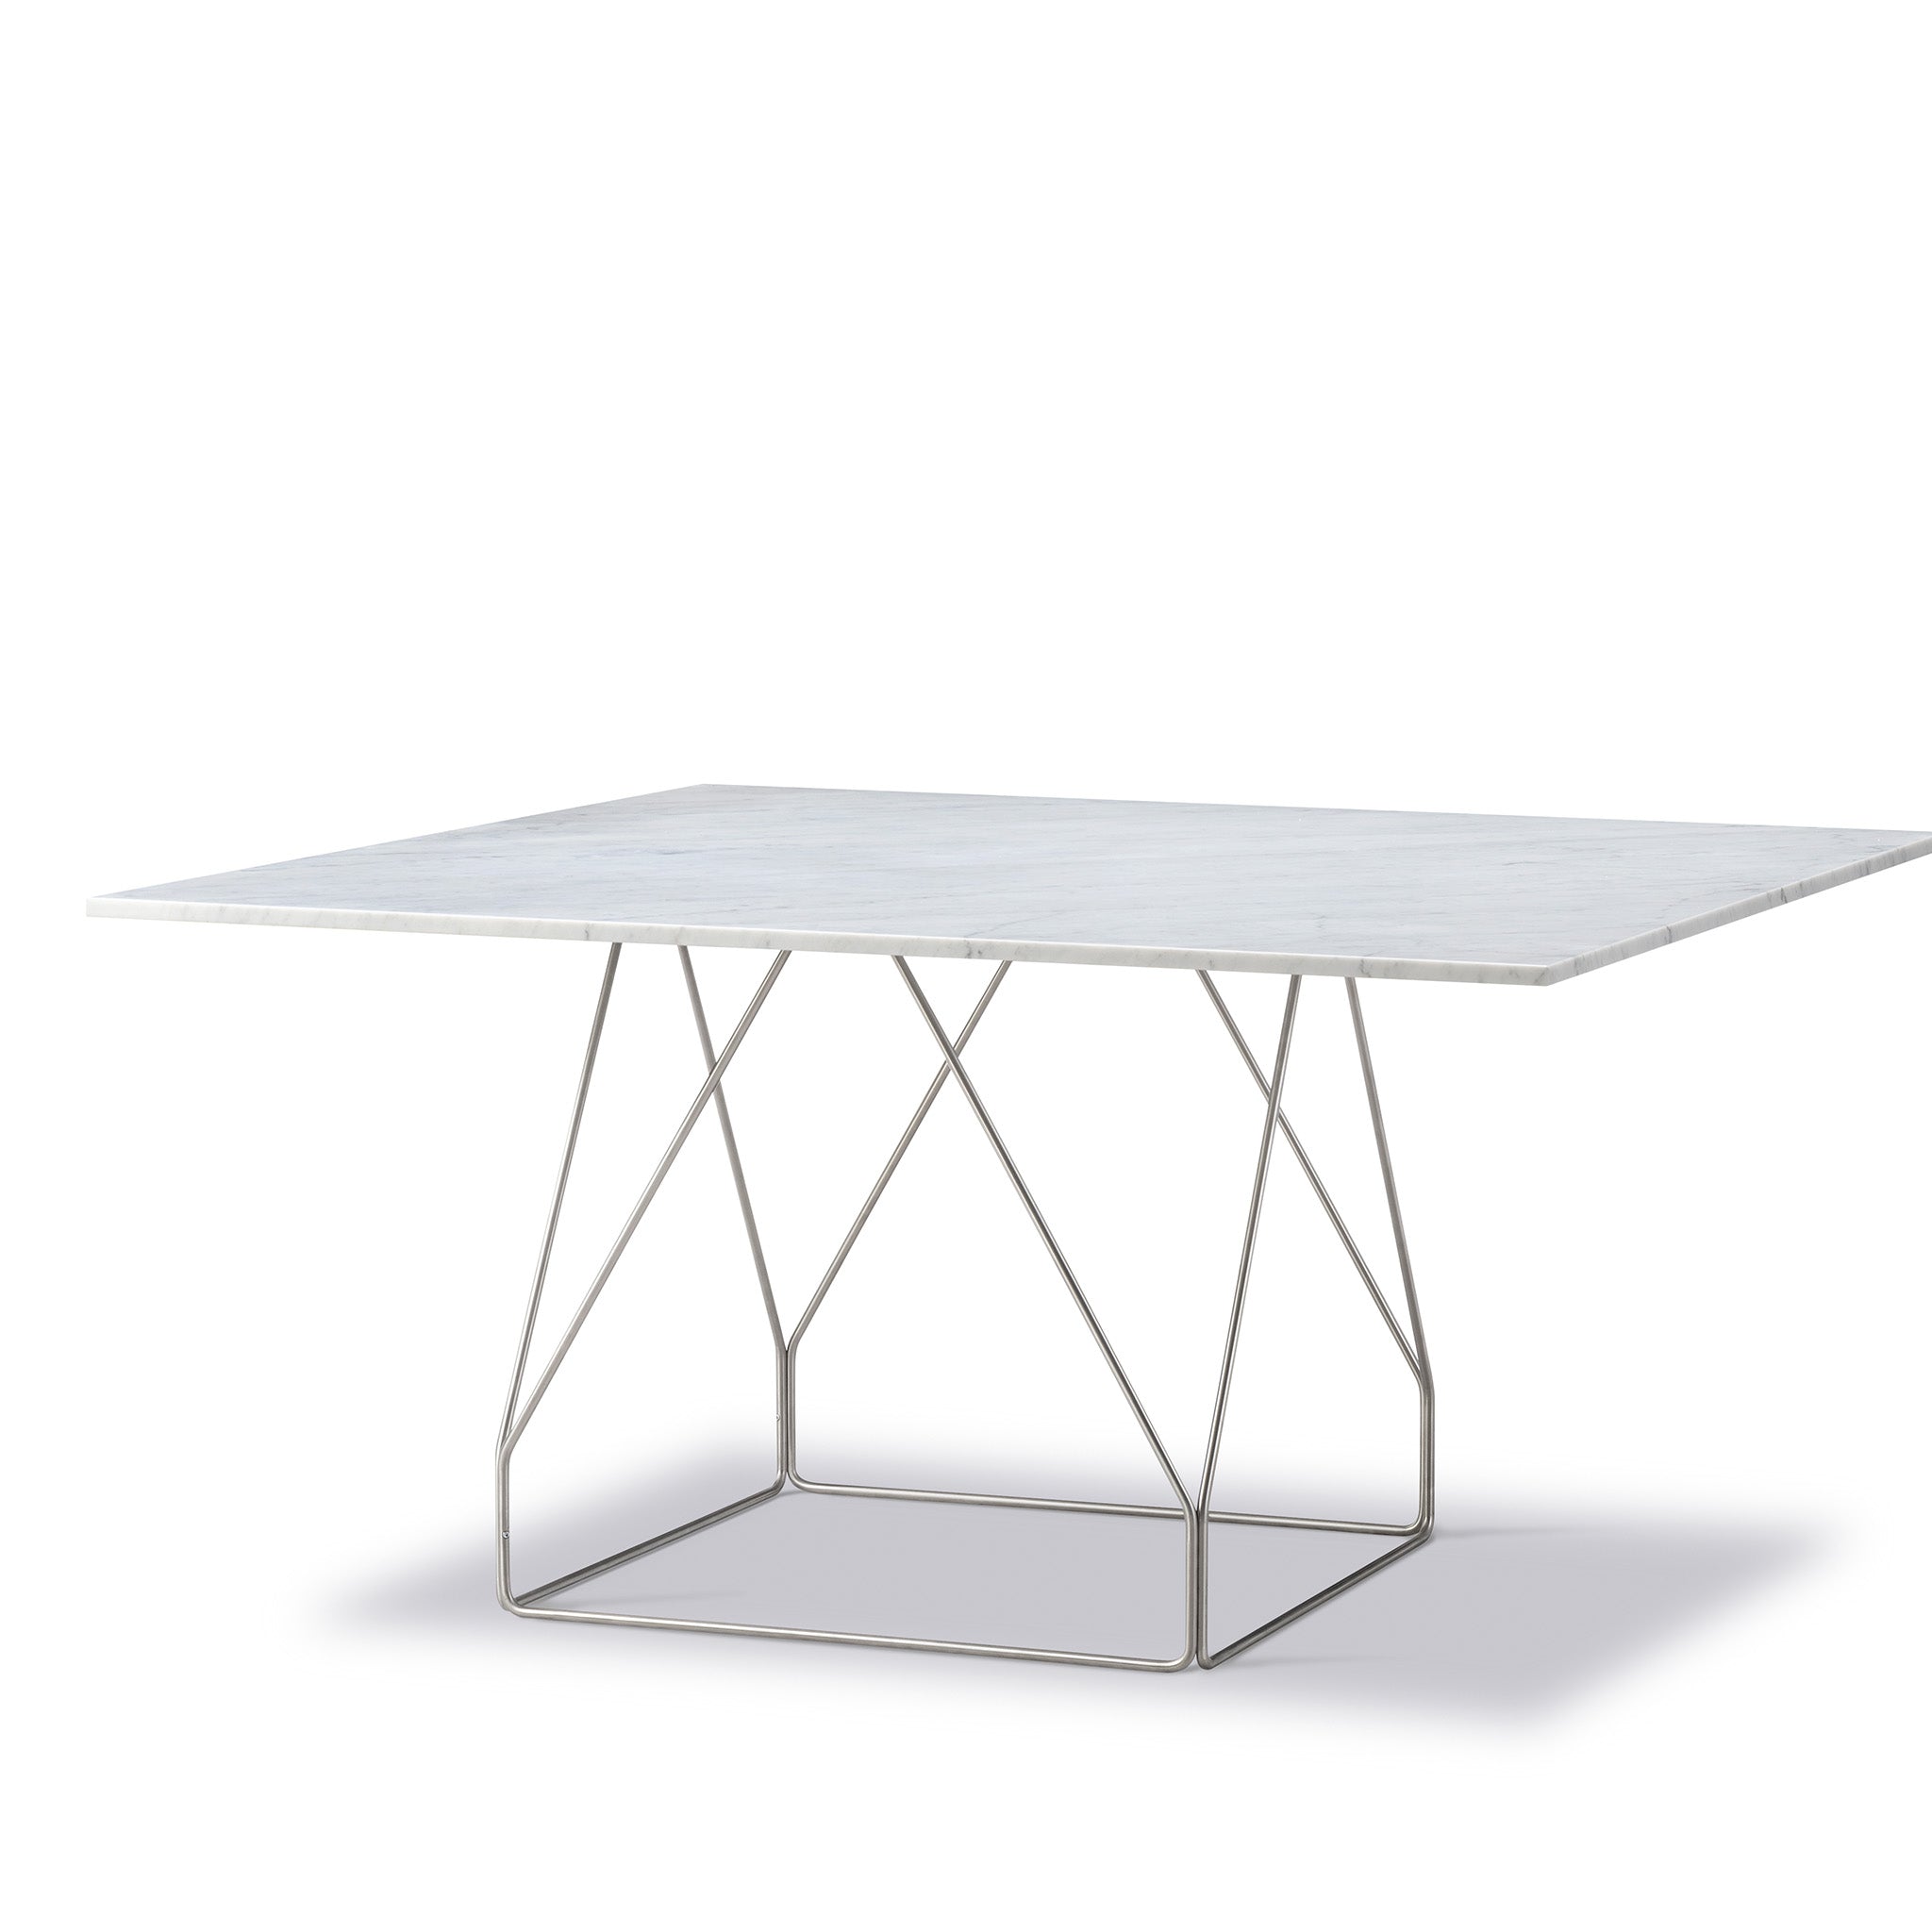 JG Table Square 140cm by Jørgen Gammelgaard